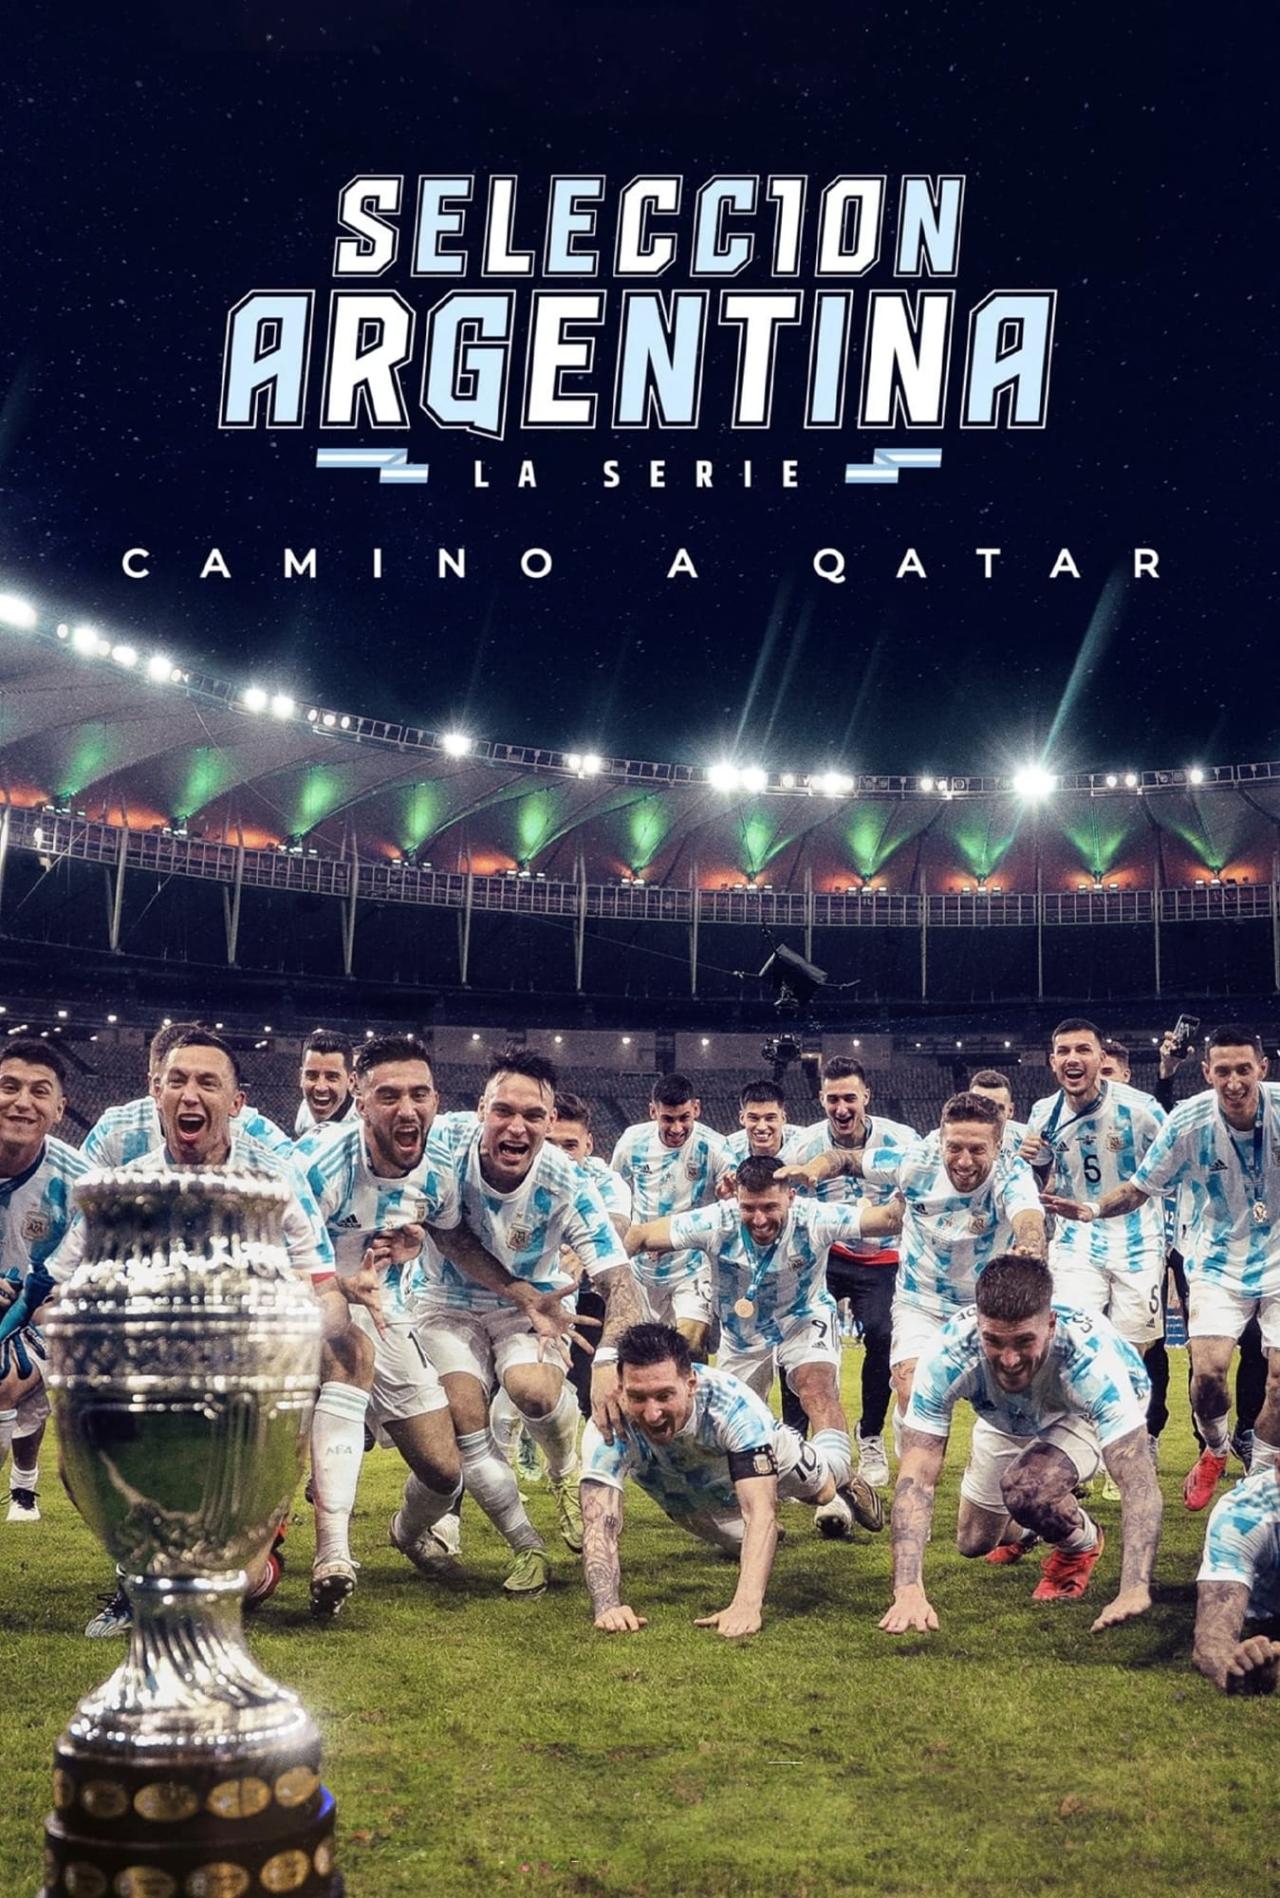 Affiche de la série Selección Argentina, la serie - Camino a Qatar